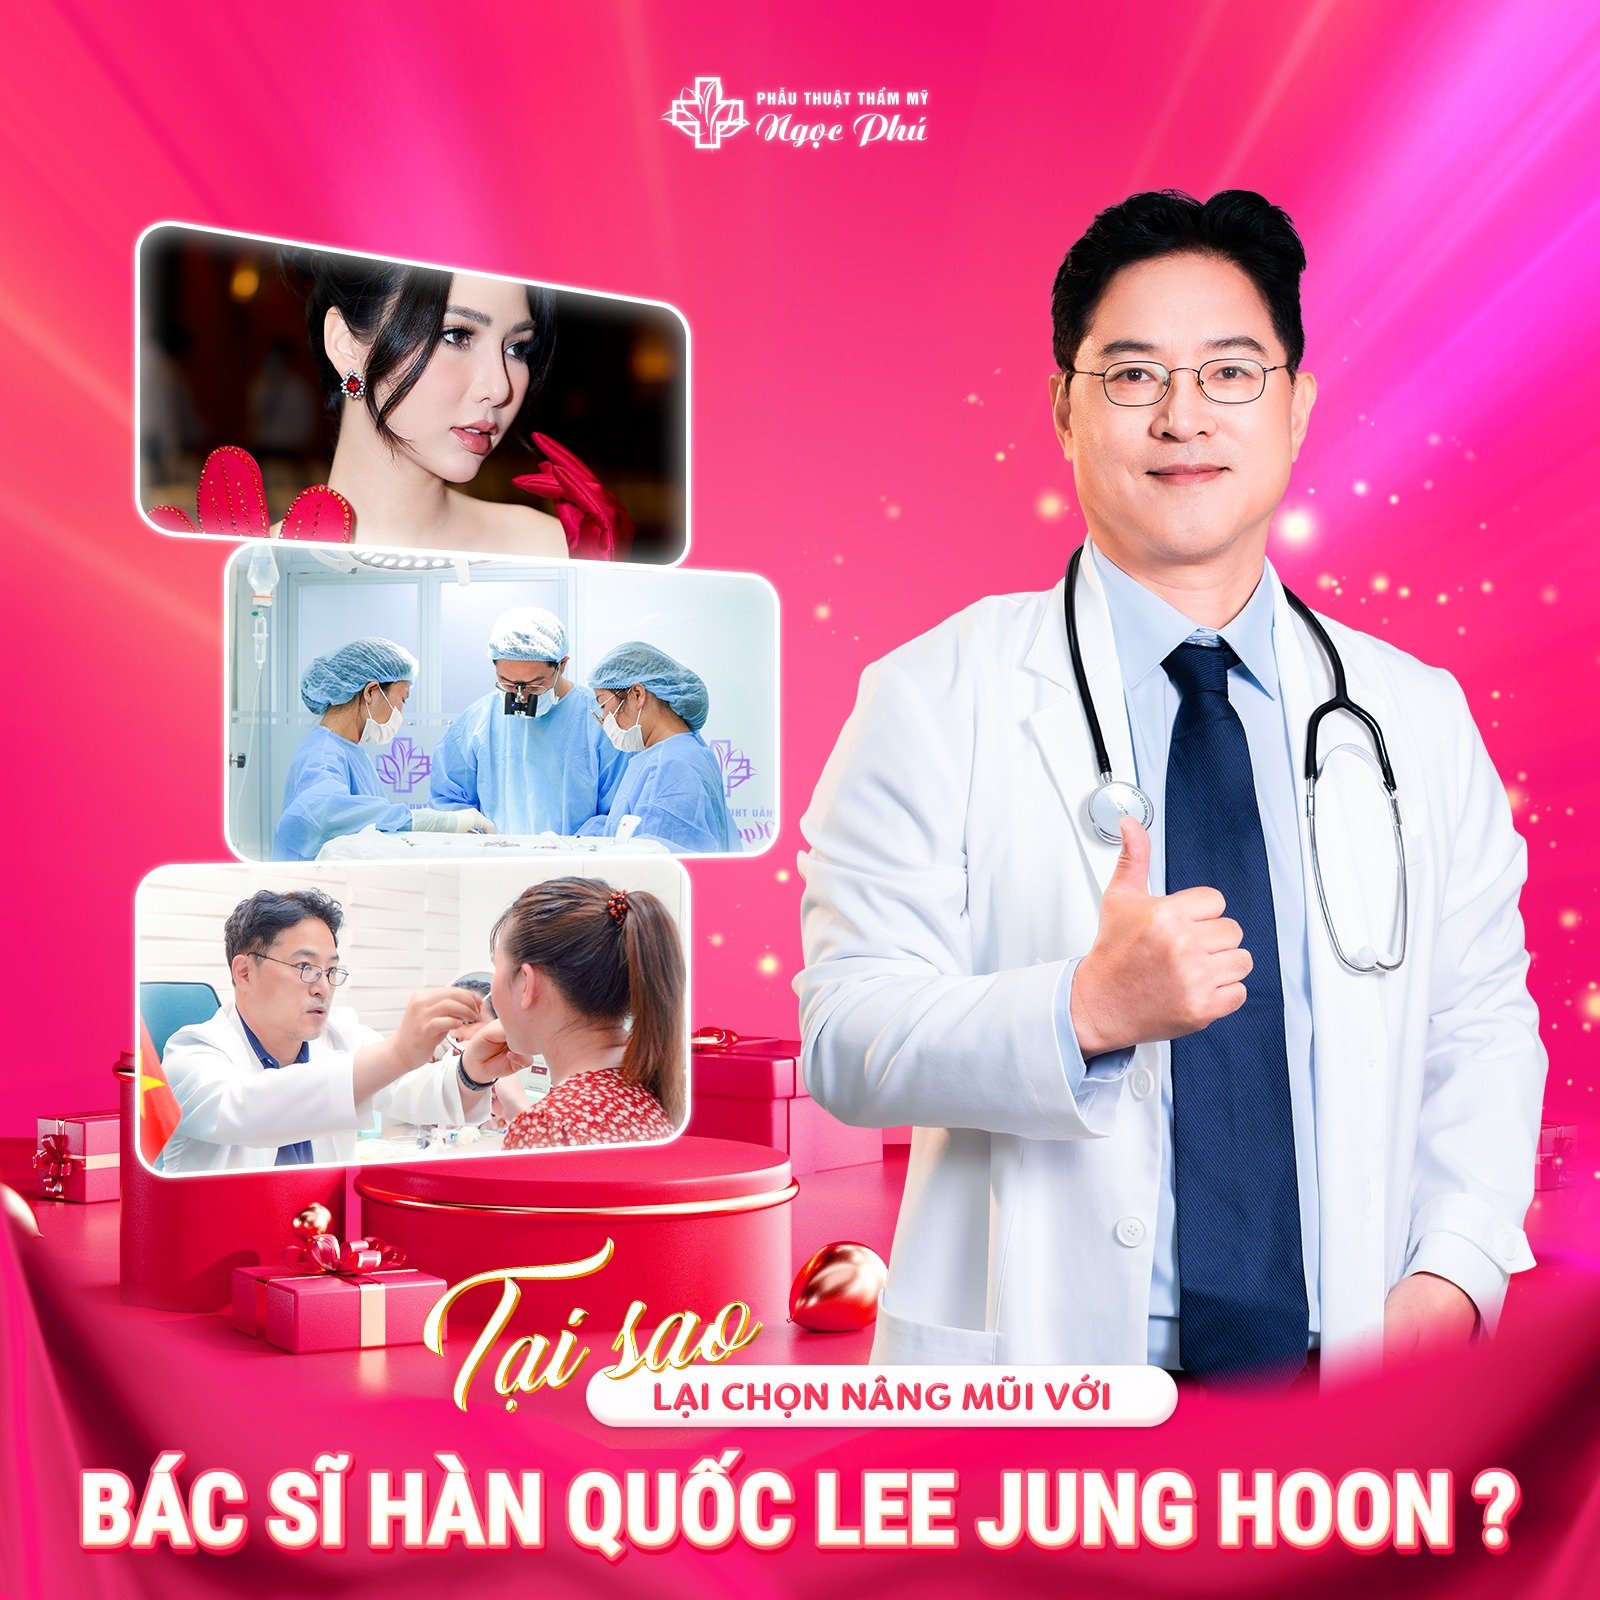 Bác sĩ Lee JUng Hoon